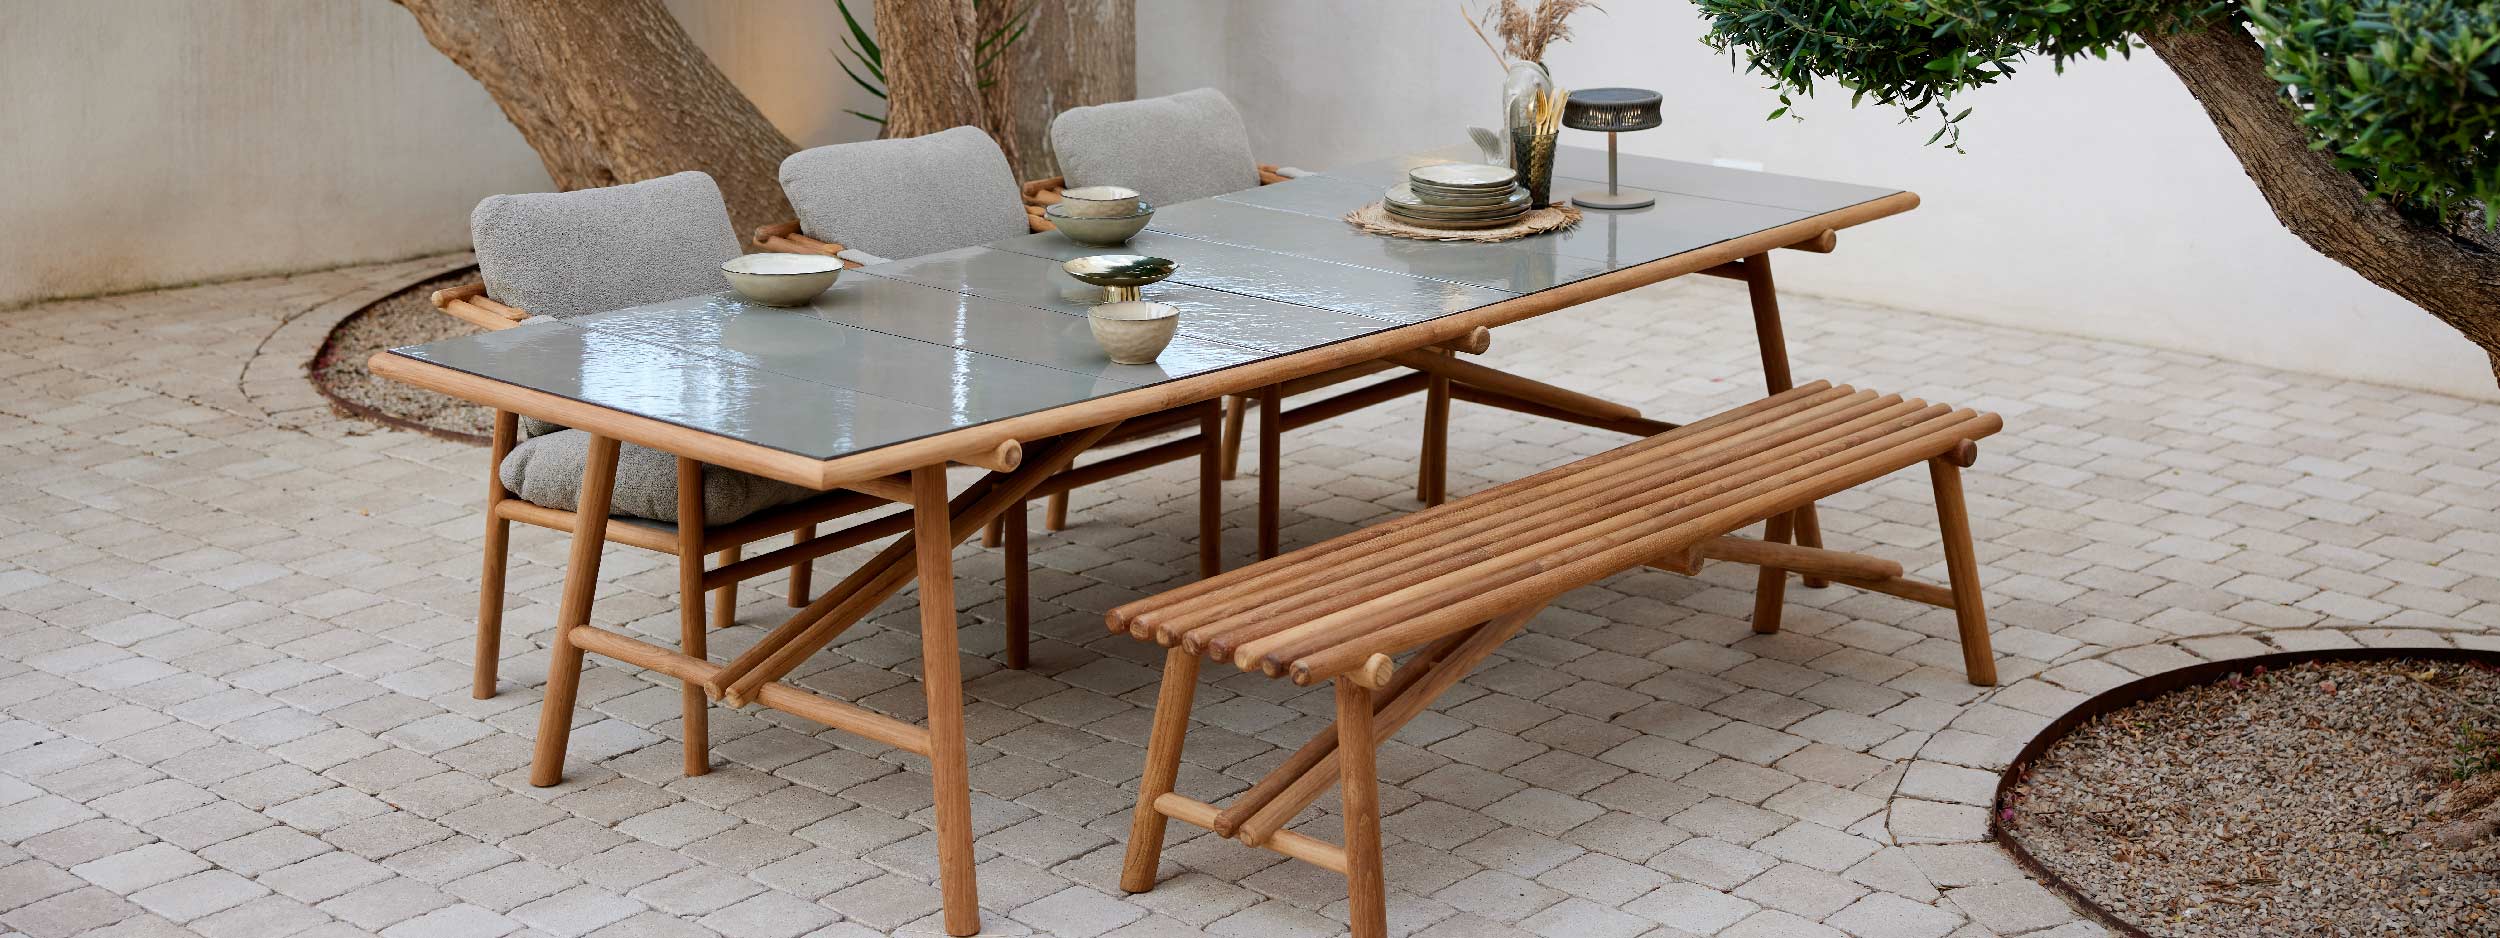 Image of Sticks teak garden dining set with bench seat